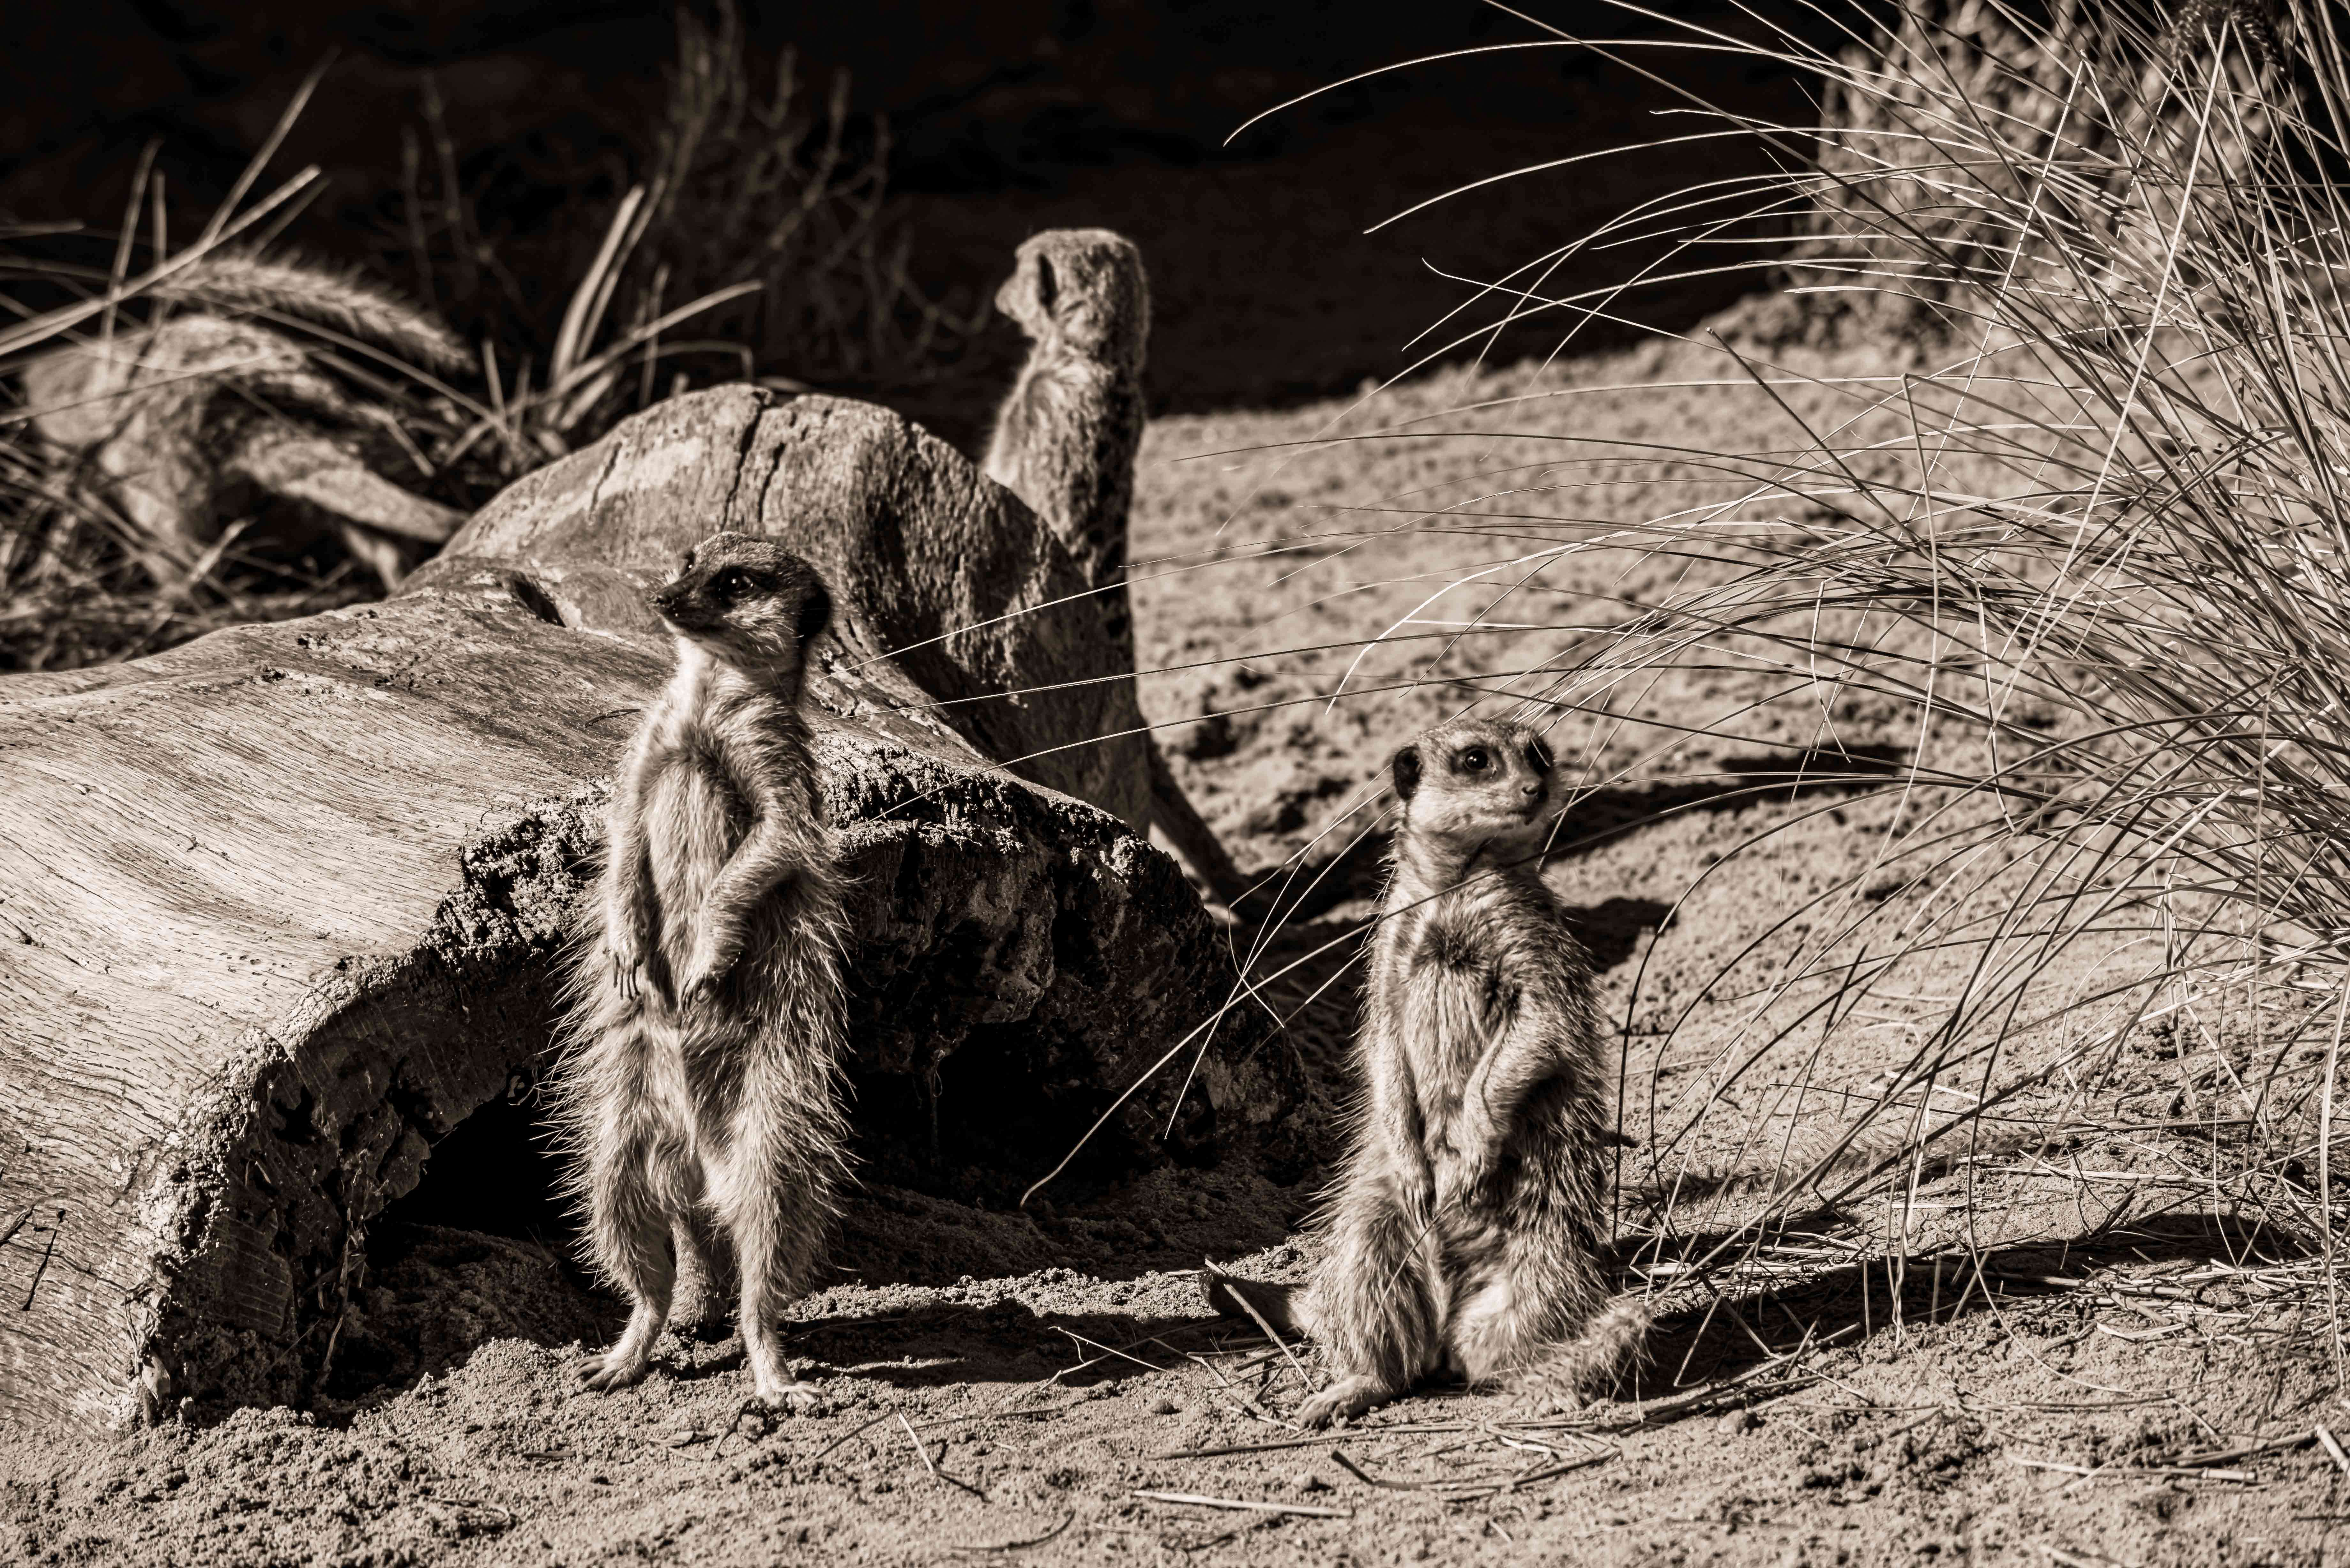 SEMD196 - DSC_7382 Sepia - 
Meerkats, Taronga Zoo,  Sydney, NSW, Australia.
1st July 2020 - 11.48am
Camera - Nikon D800 
F8 - ISO 250 - 1/640 second - Focal Length 210mm : Wildlife - Sepia : Stephen E-Moran - Fine Art Photography